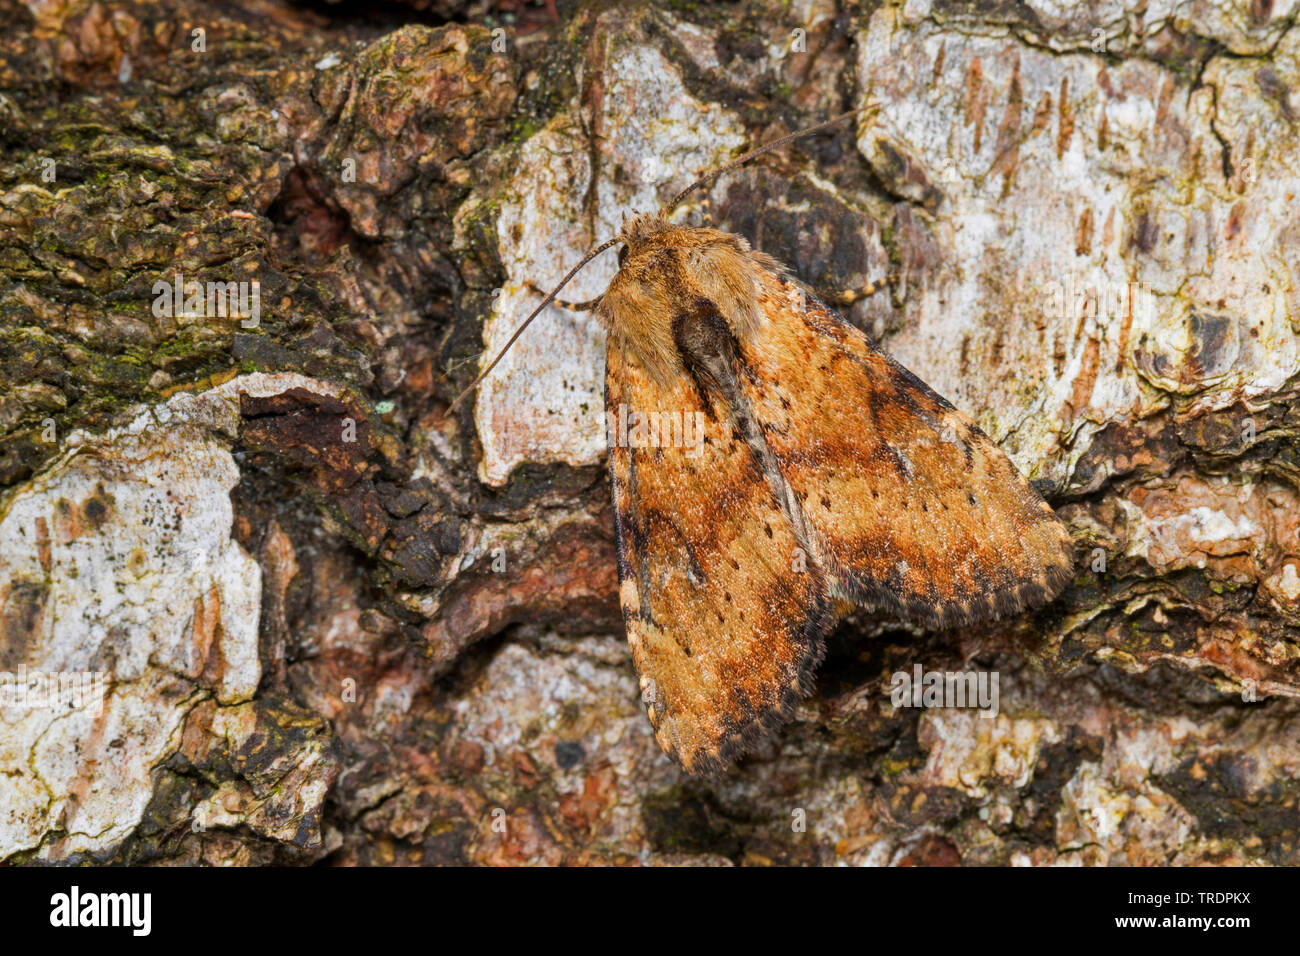 Snello brindle (Apamea scolopacina, Parastichtis scolopacina), seduto sulla corteccia, Germania Foto Stock